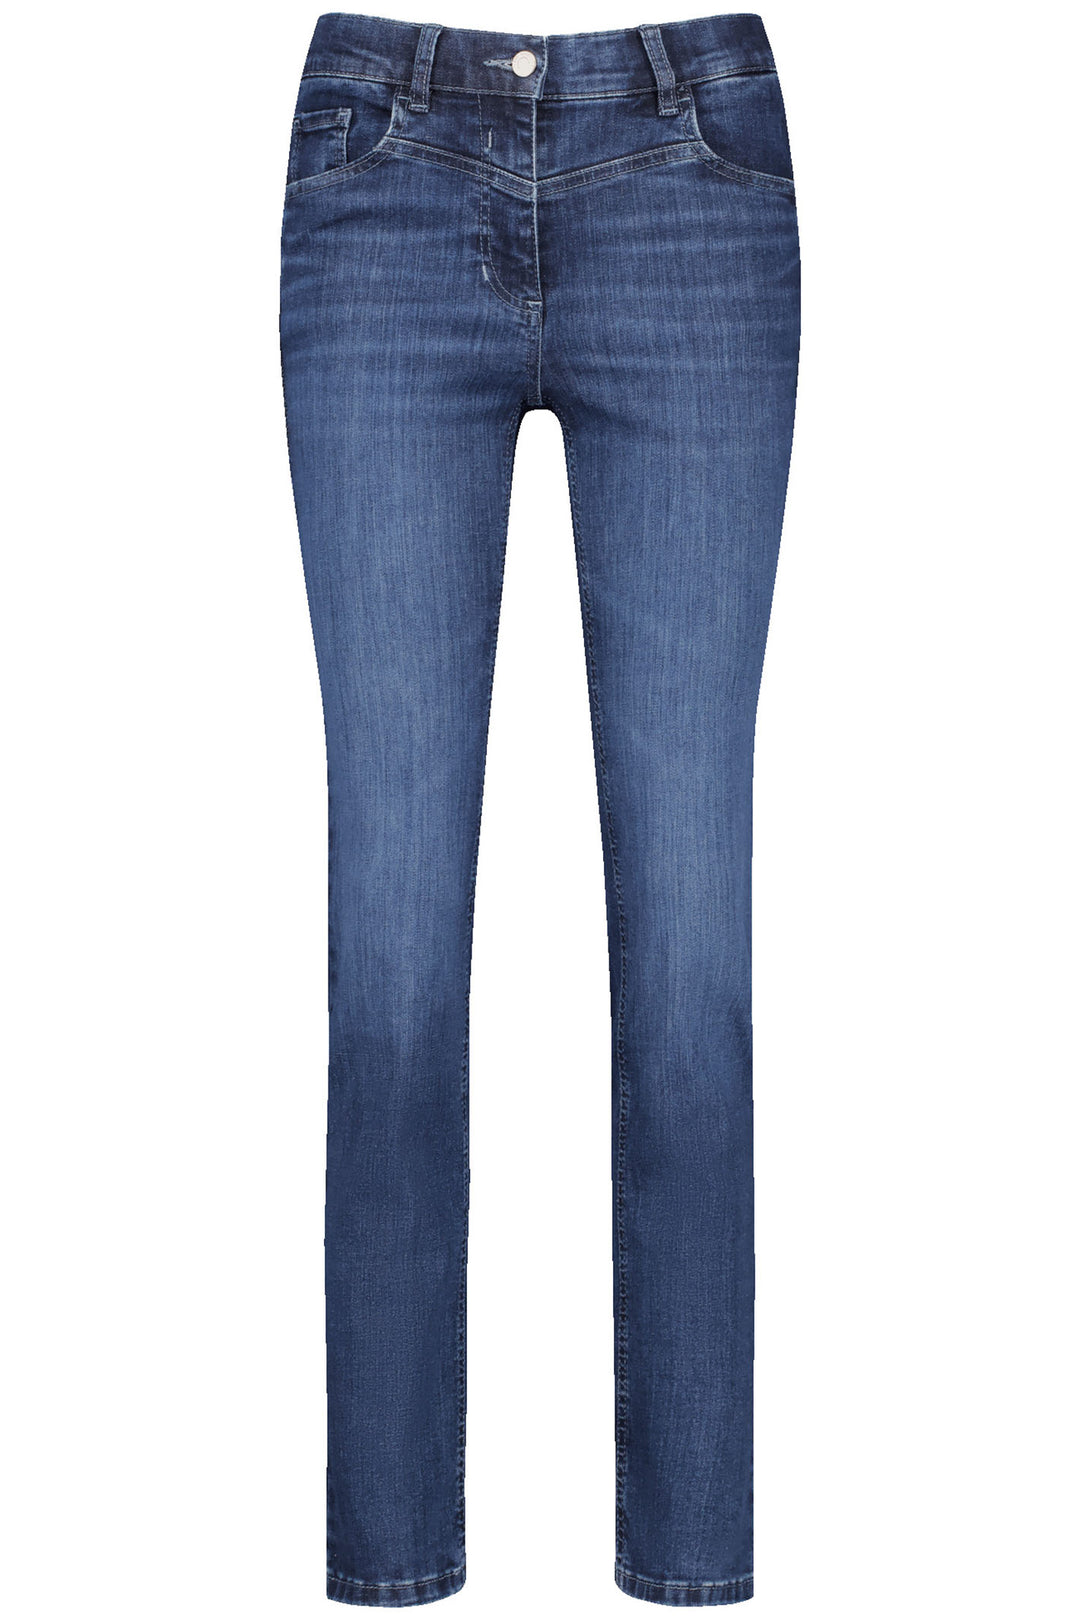 Gerry Weber 925061 Blue Denim Perfect4Ever Slim Leg Jeans Short